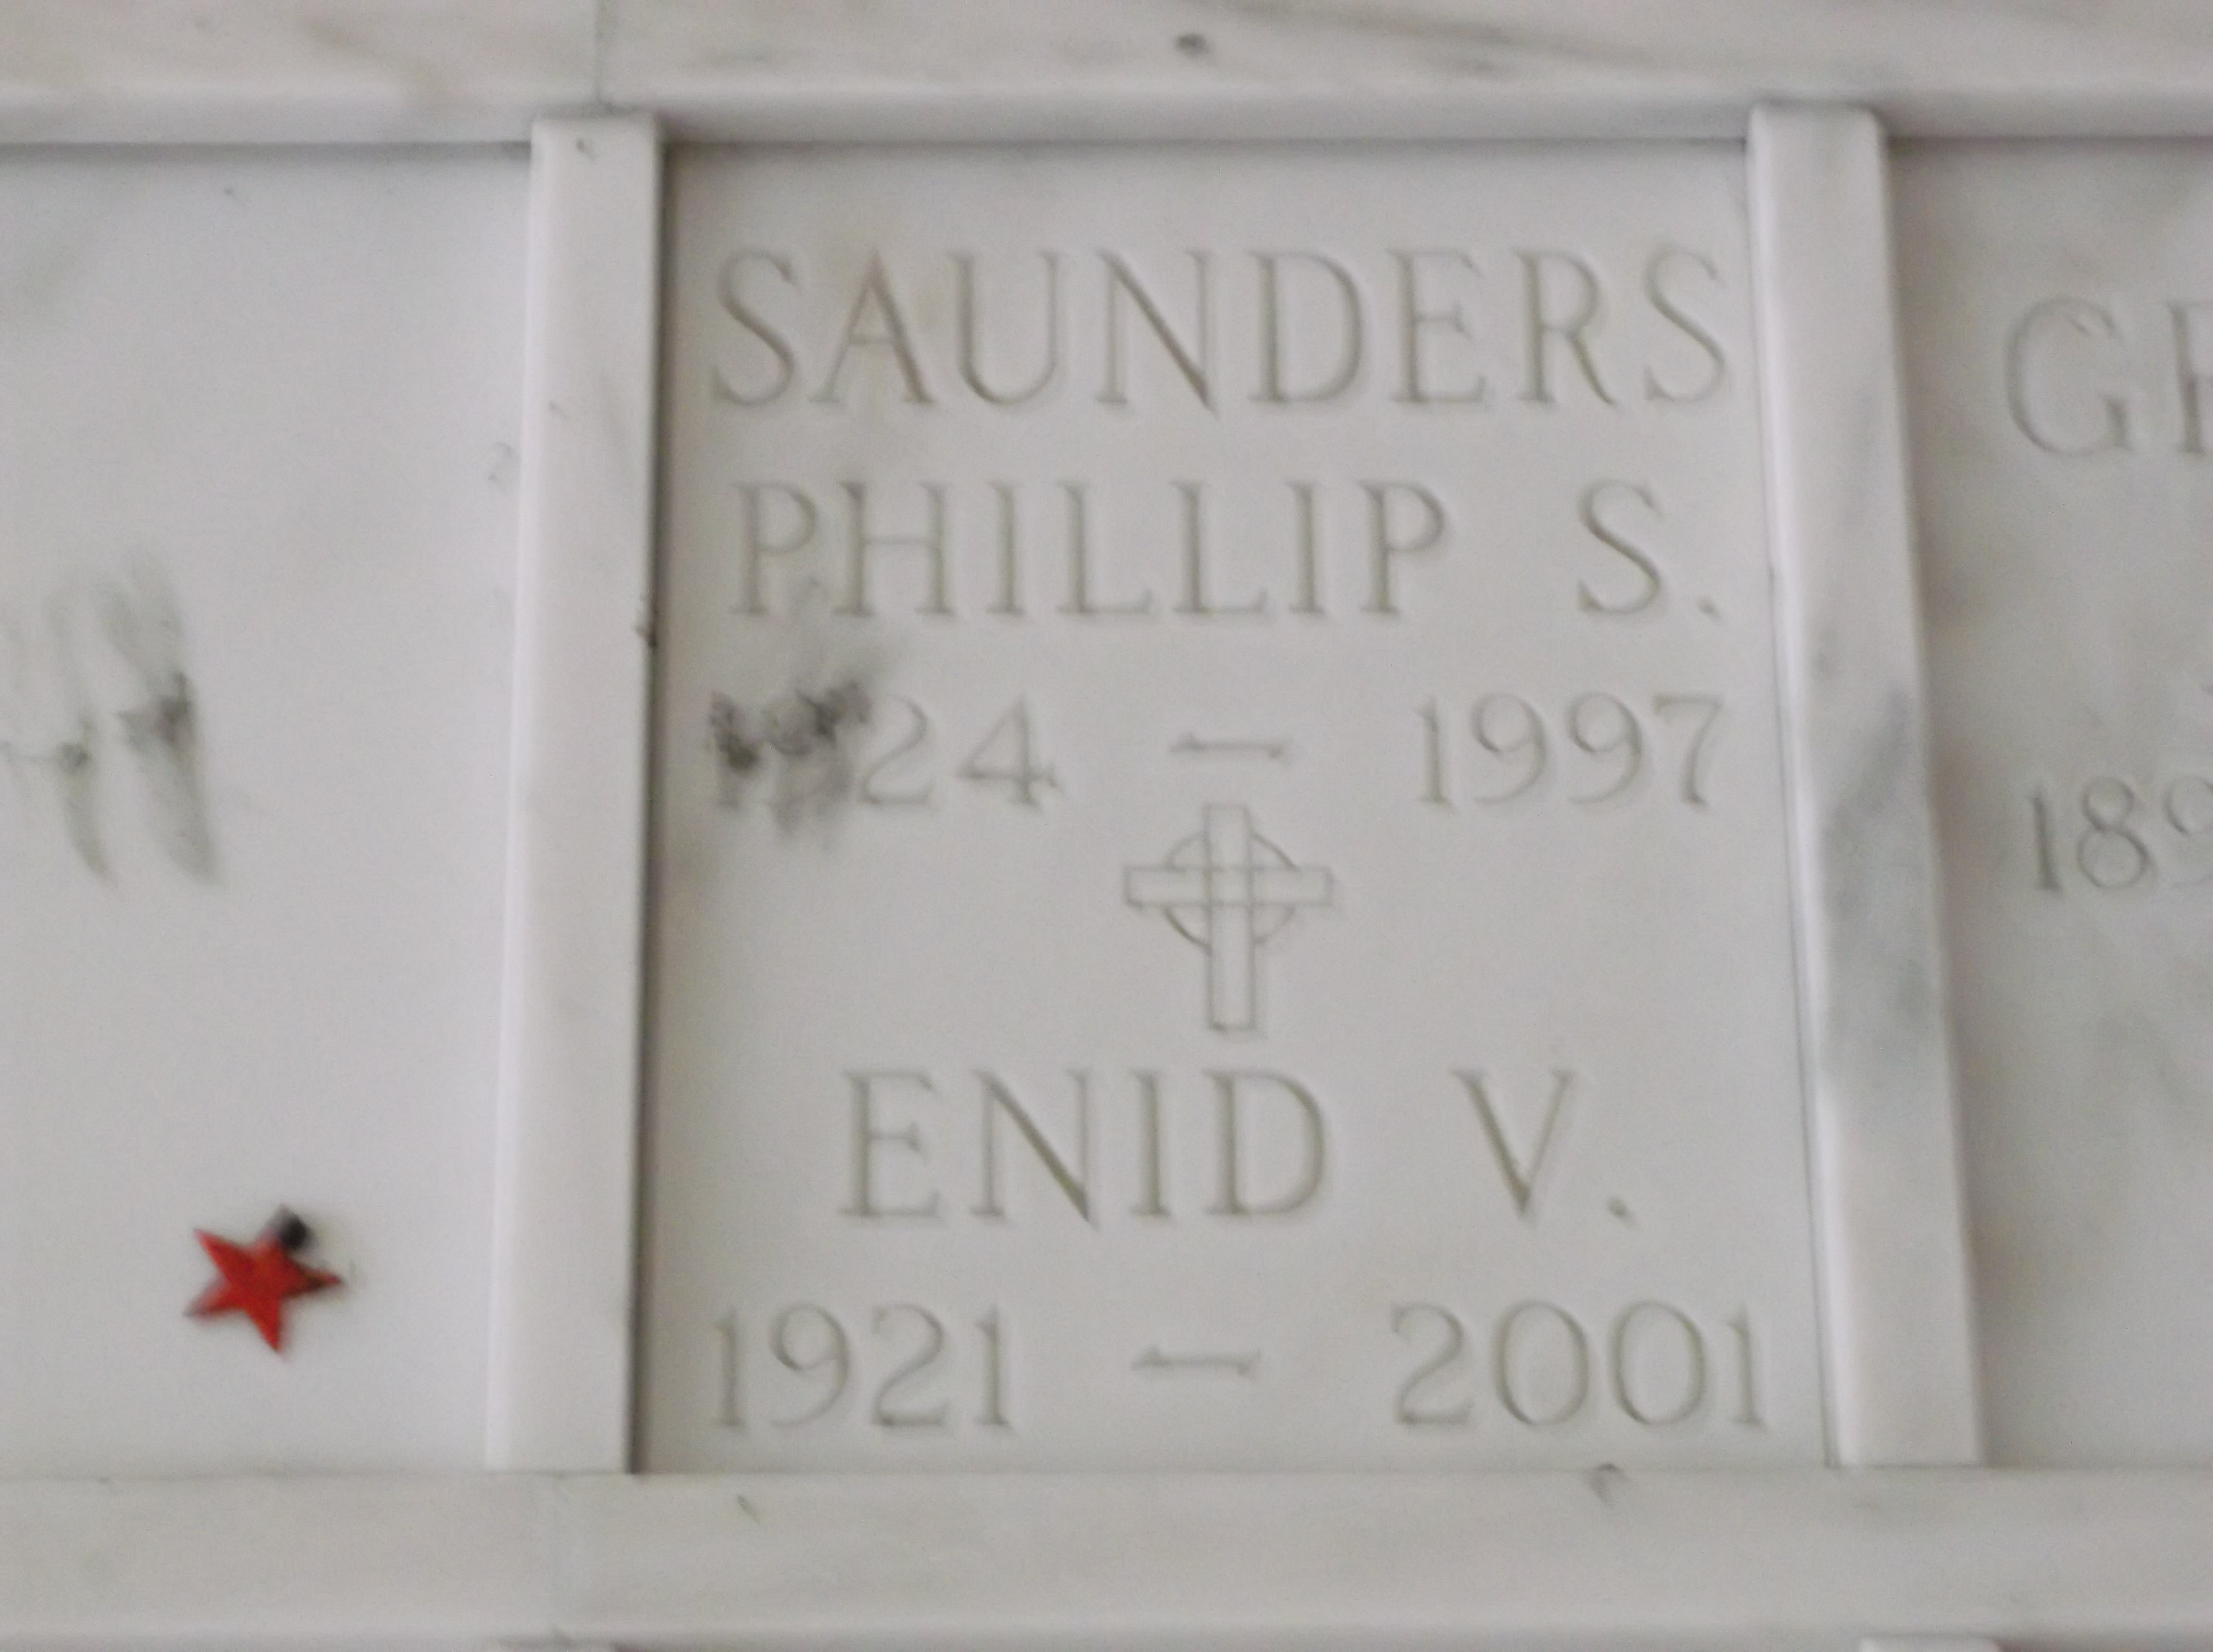 Phillip S Saunders